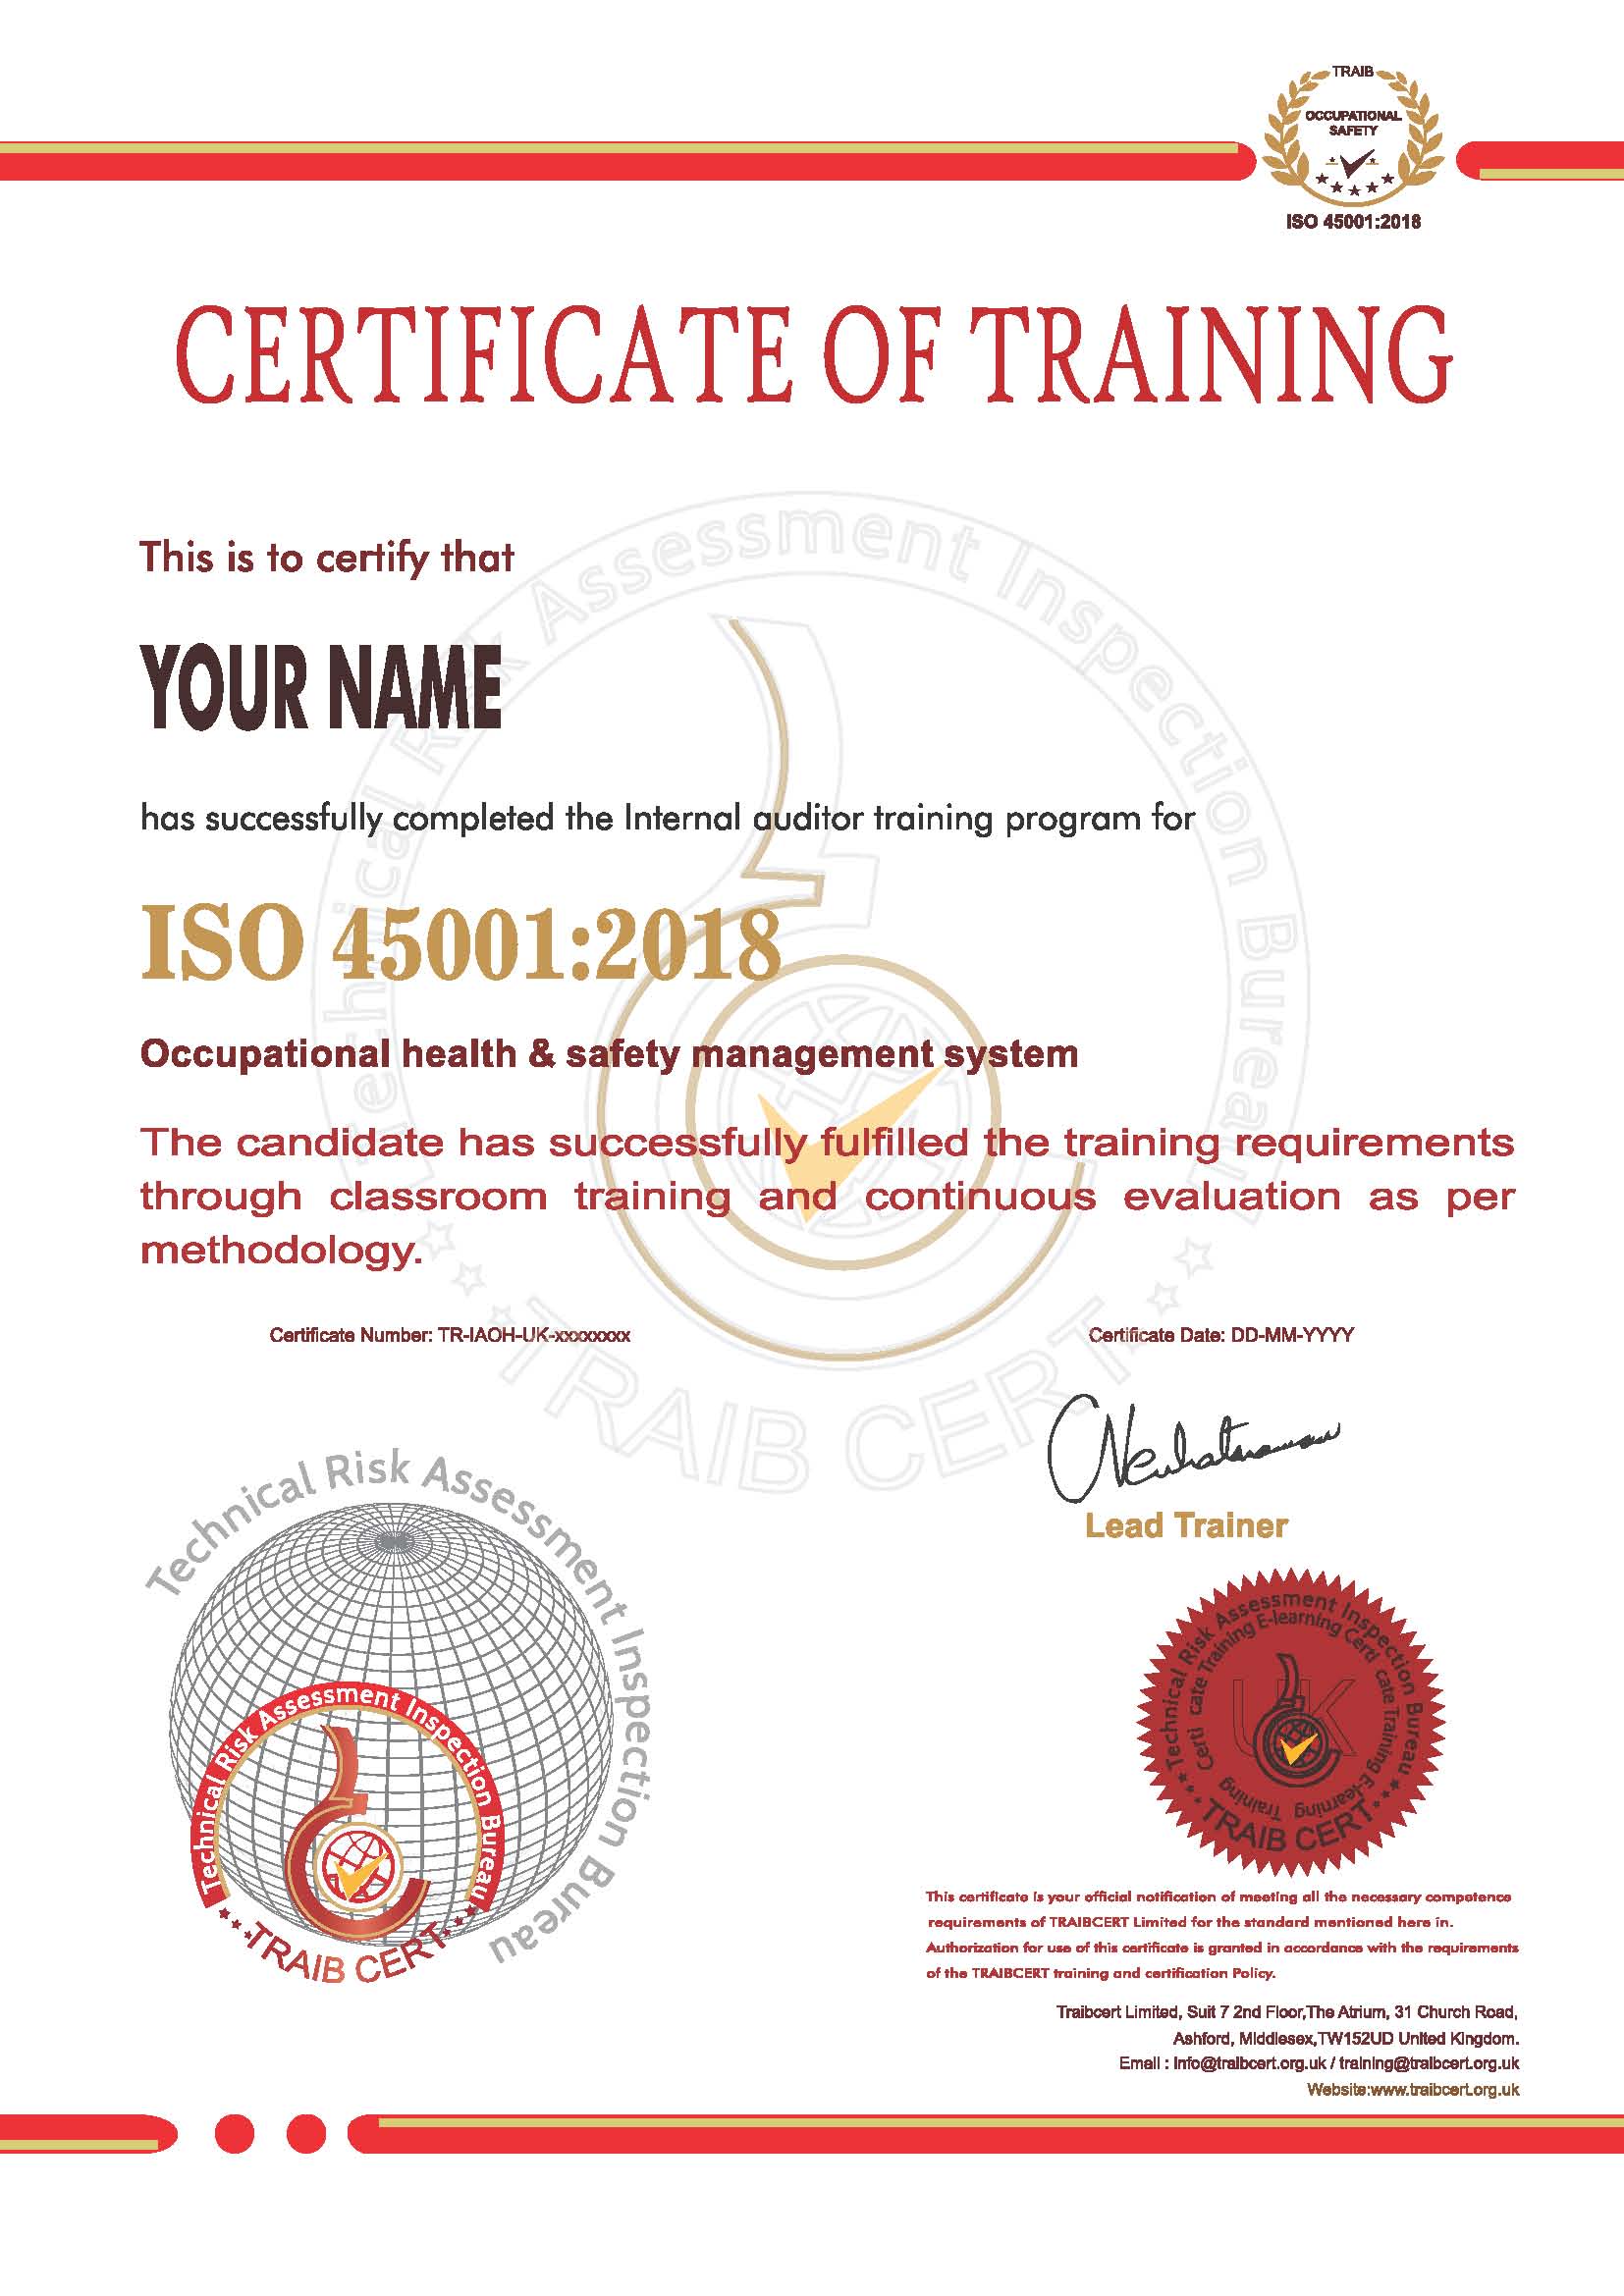 ISO 45001:2018 Internal Auditor online Training module elearning UK